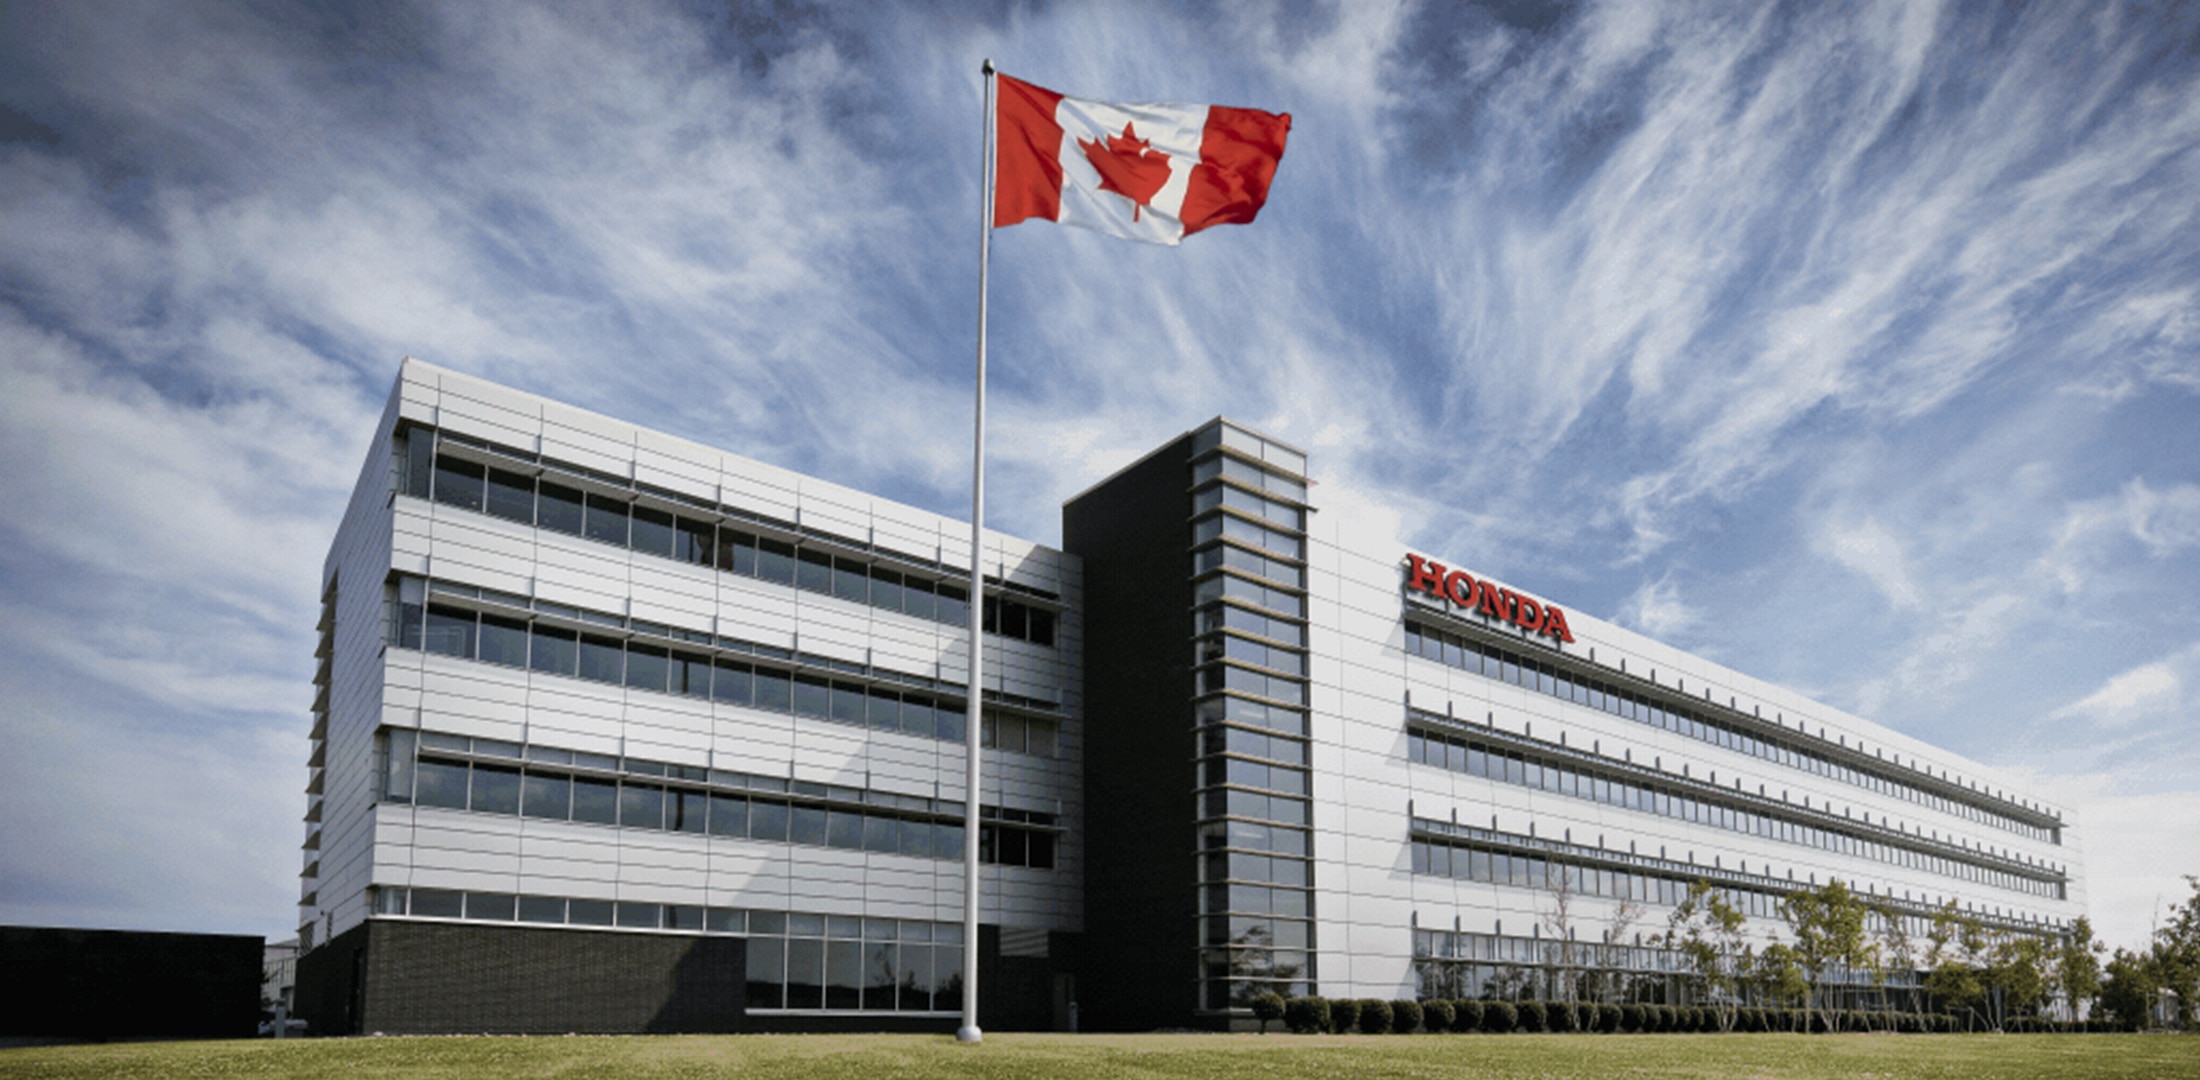 Honda Canada’s headquarters with a Canadian flag waving on a flagpole.